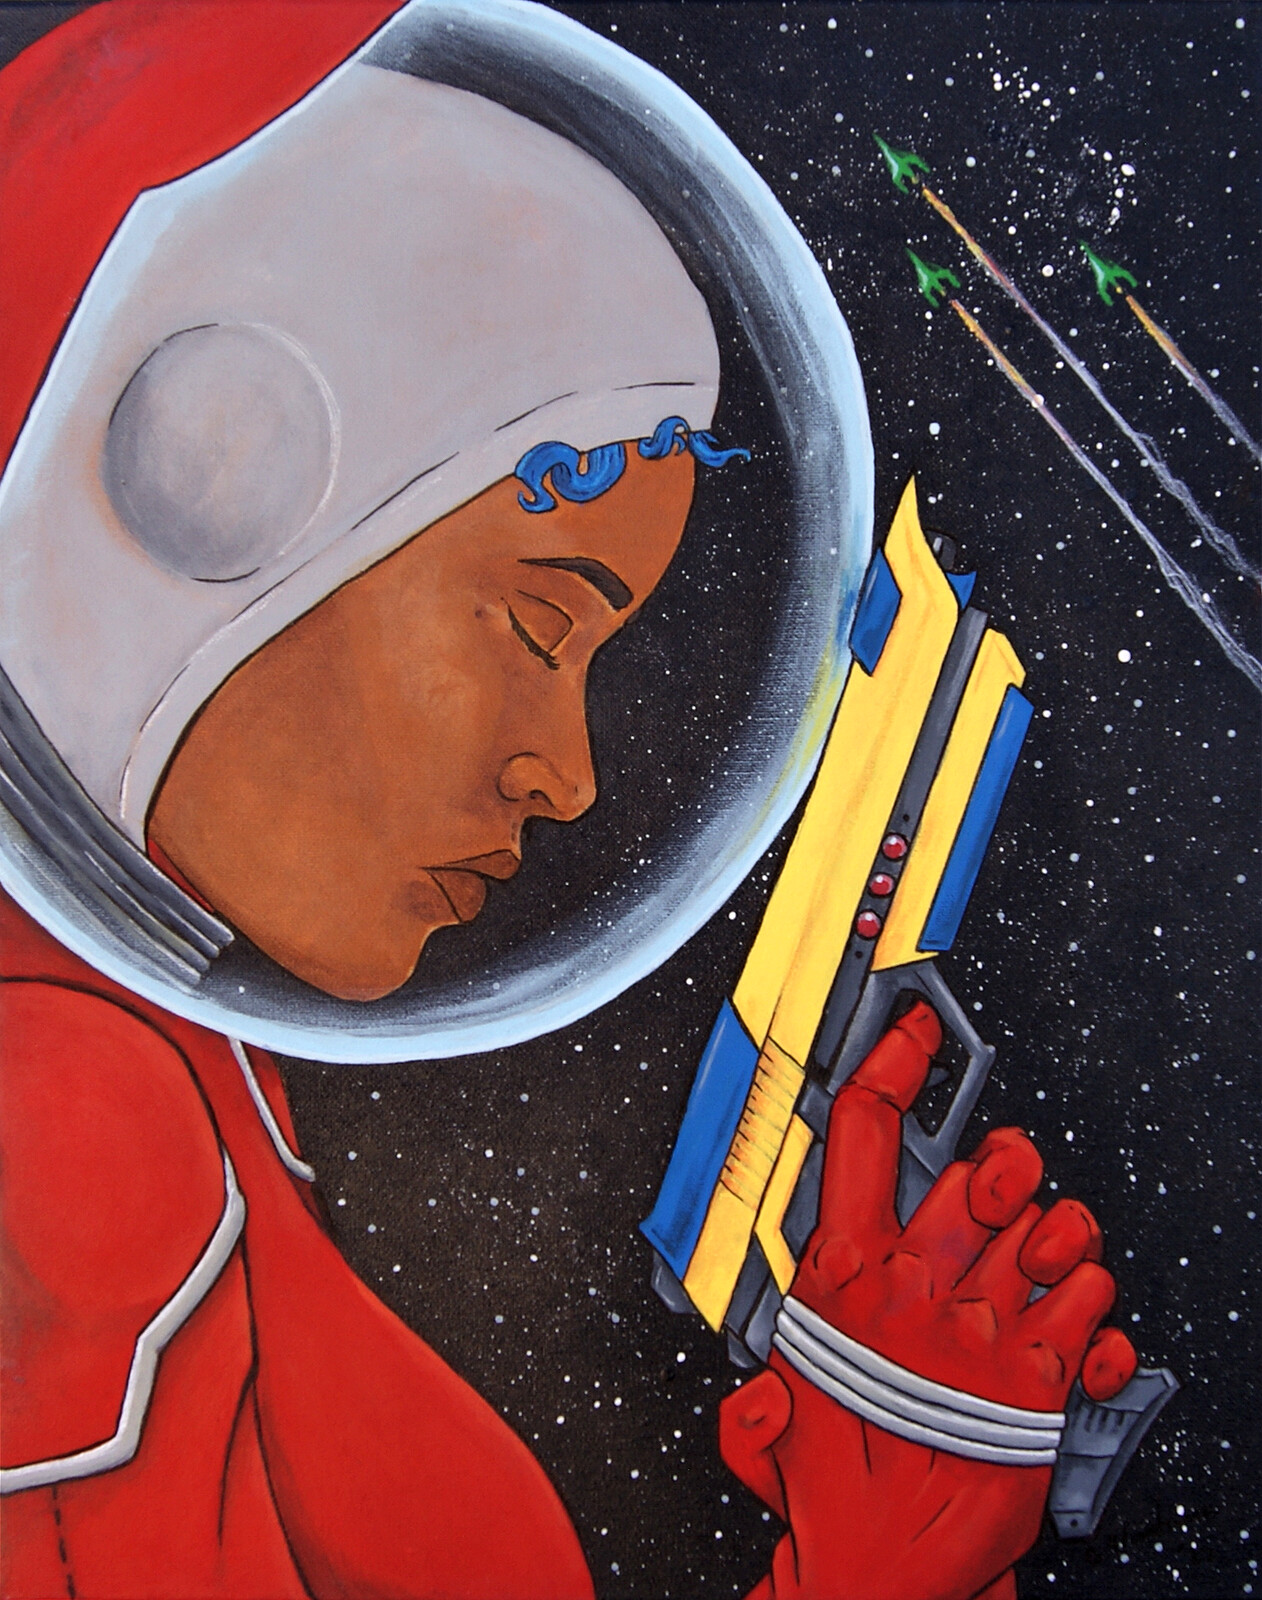 "Invasion"
Sci-Fi painting by Glenn D. Woodrome